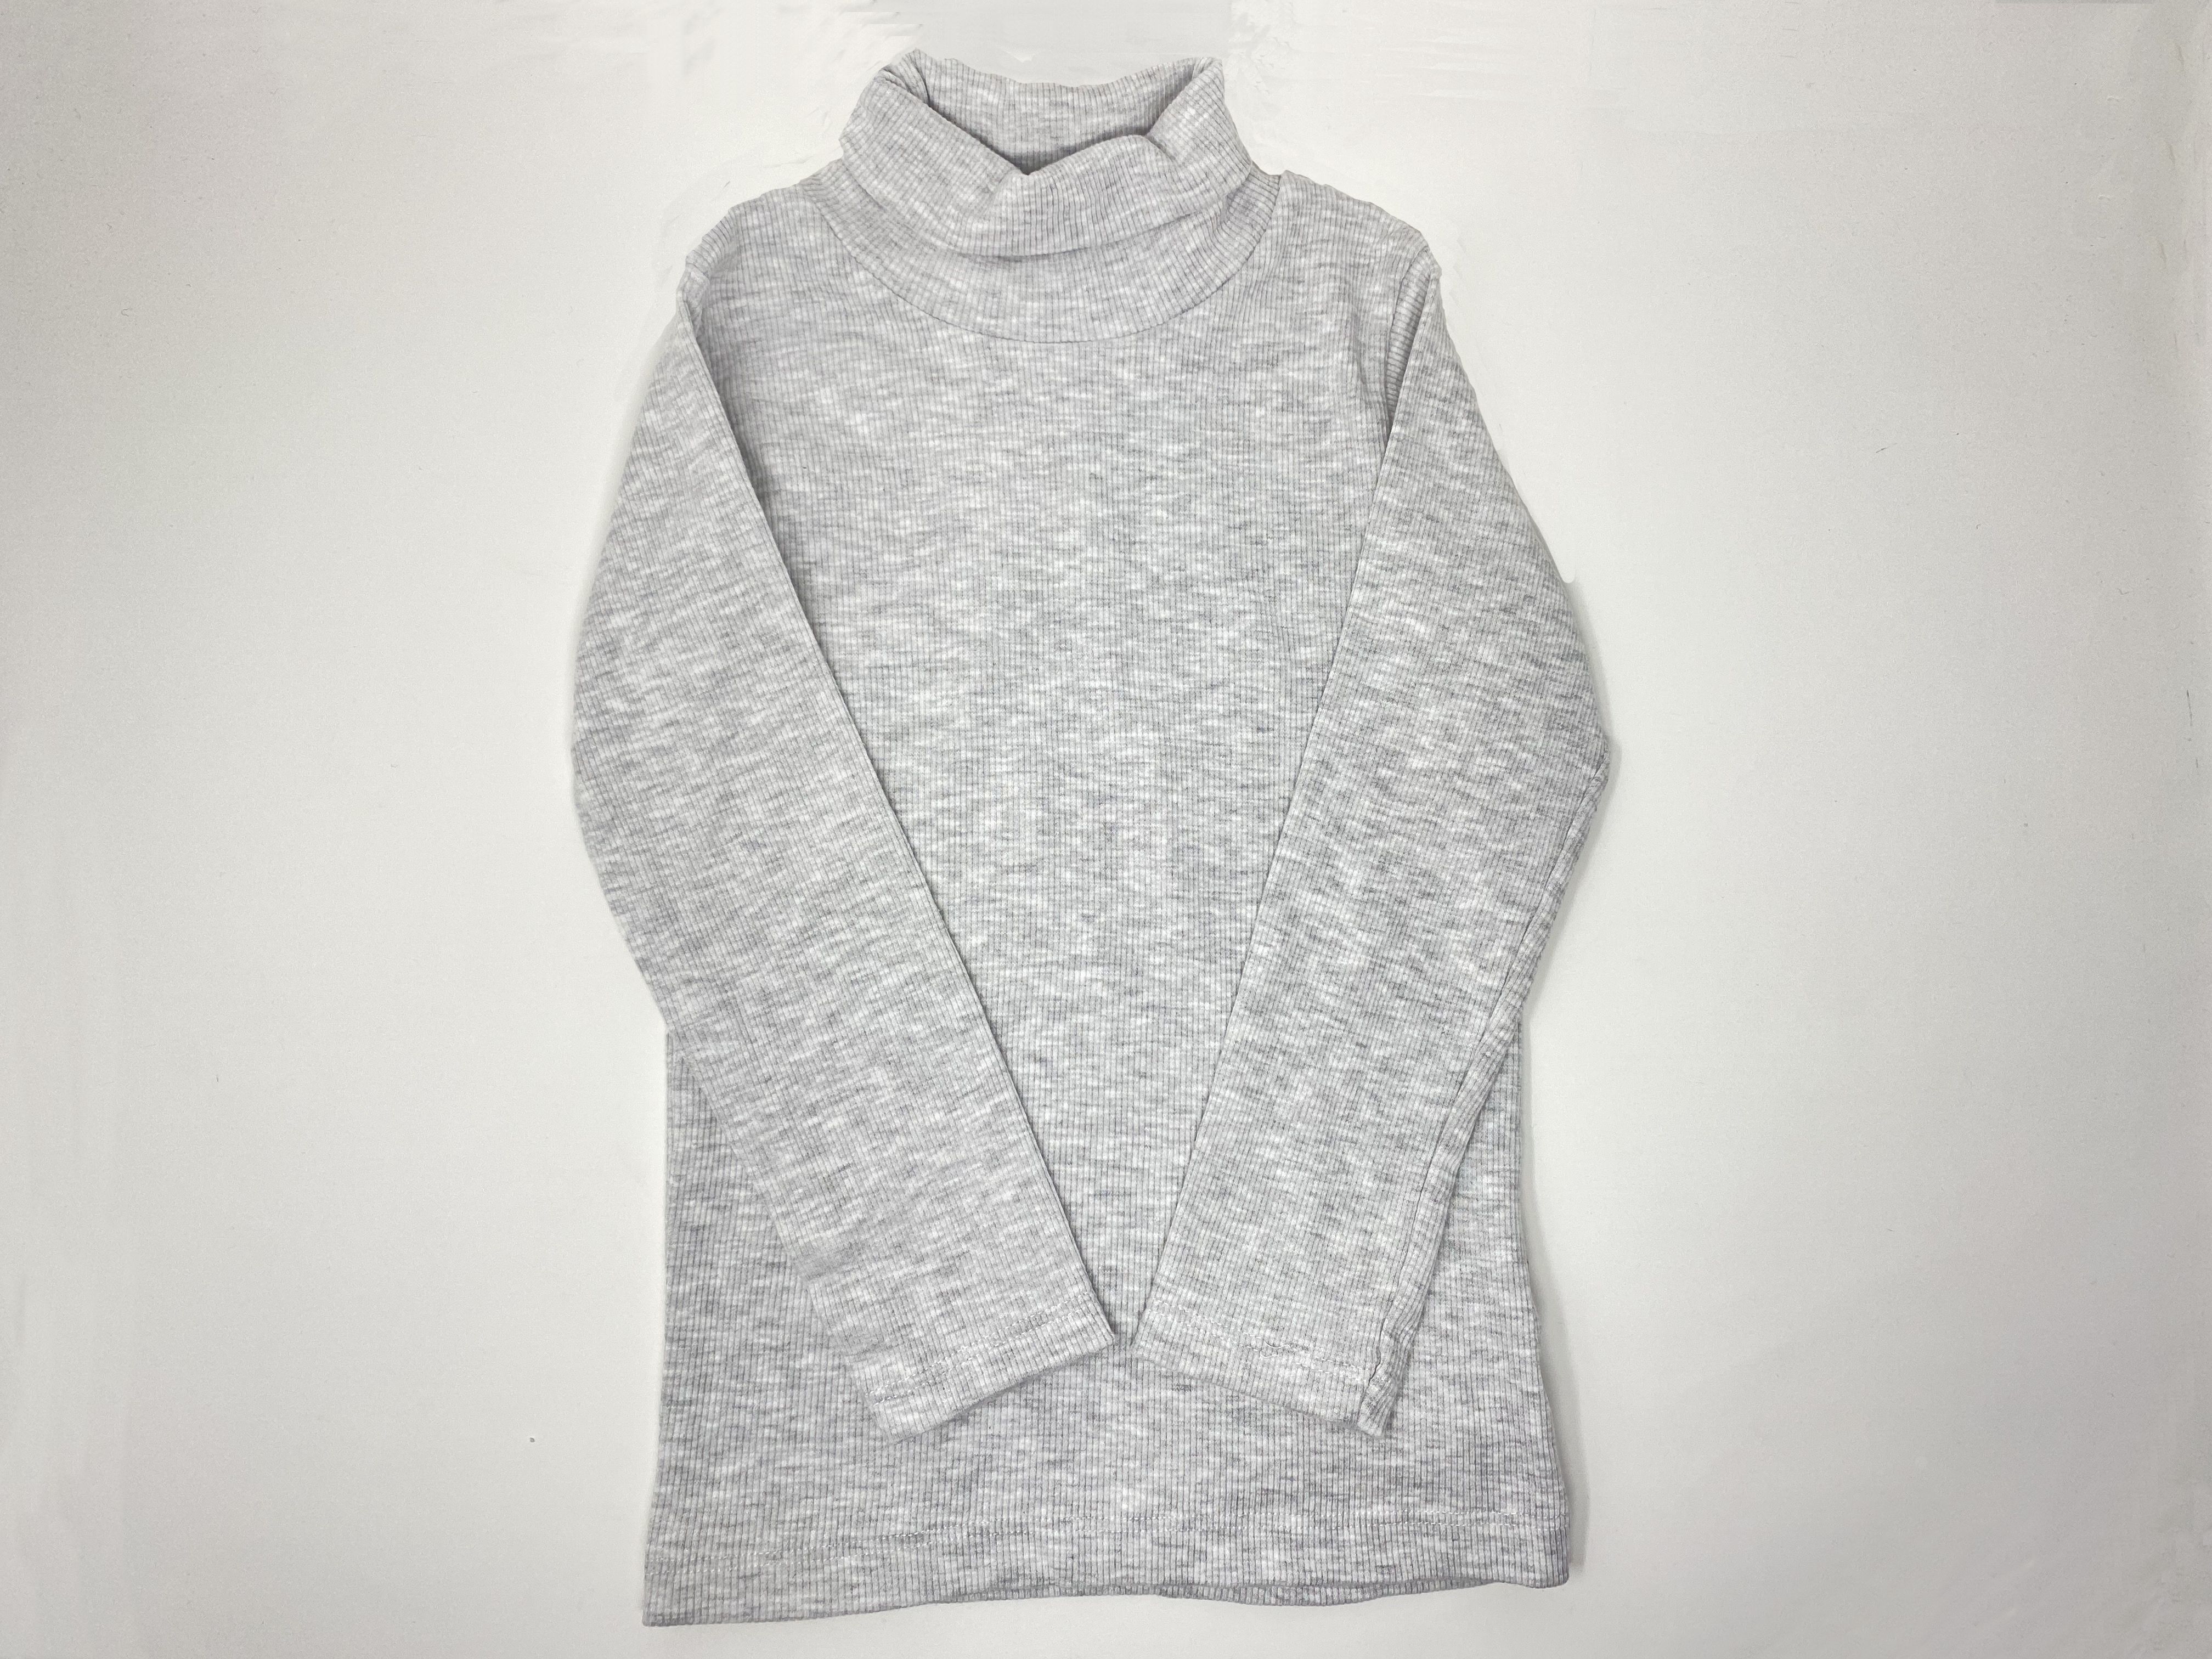 Rollkragen Pullover Kinder Jersey Shirt / Sweat Shirt Sweatshirt gerippt Grau meliert